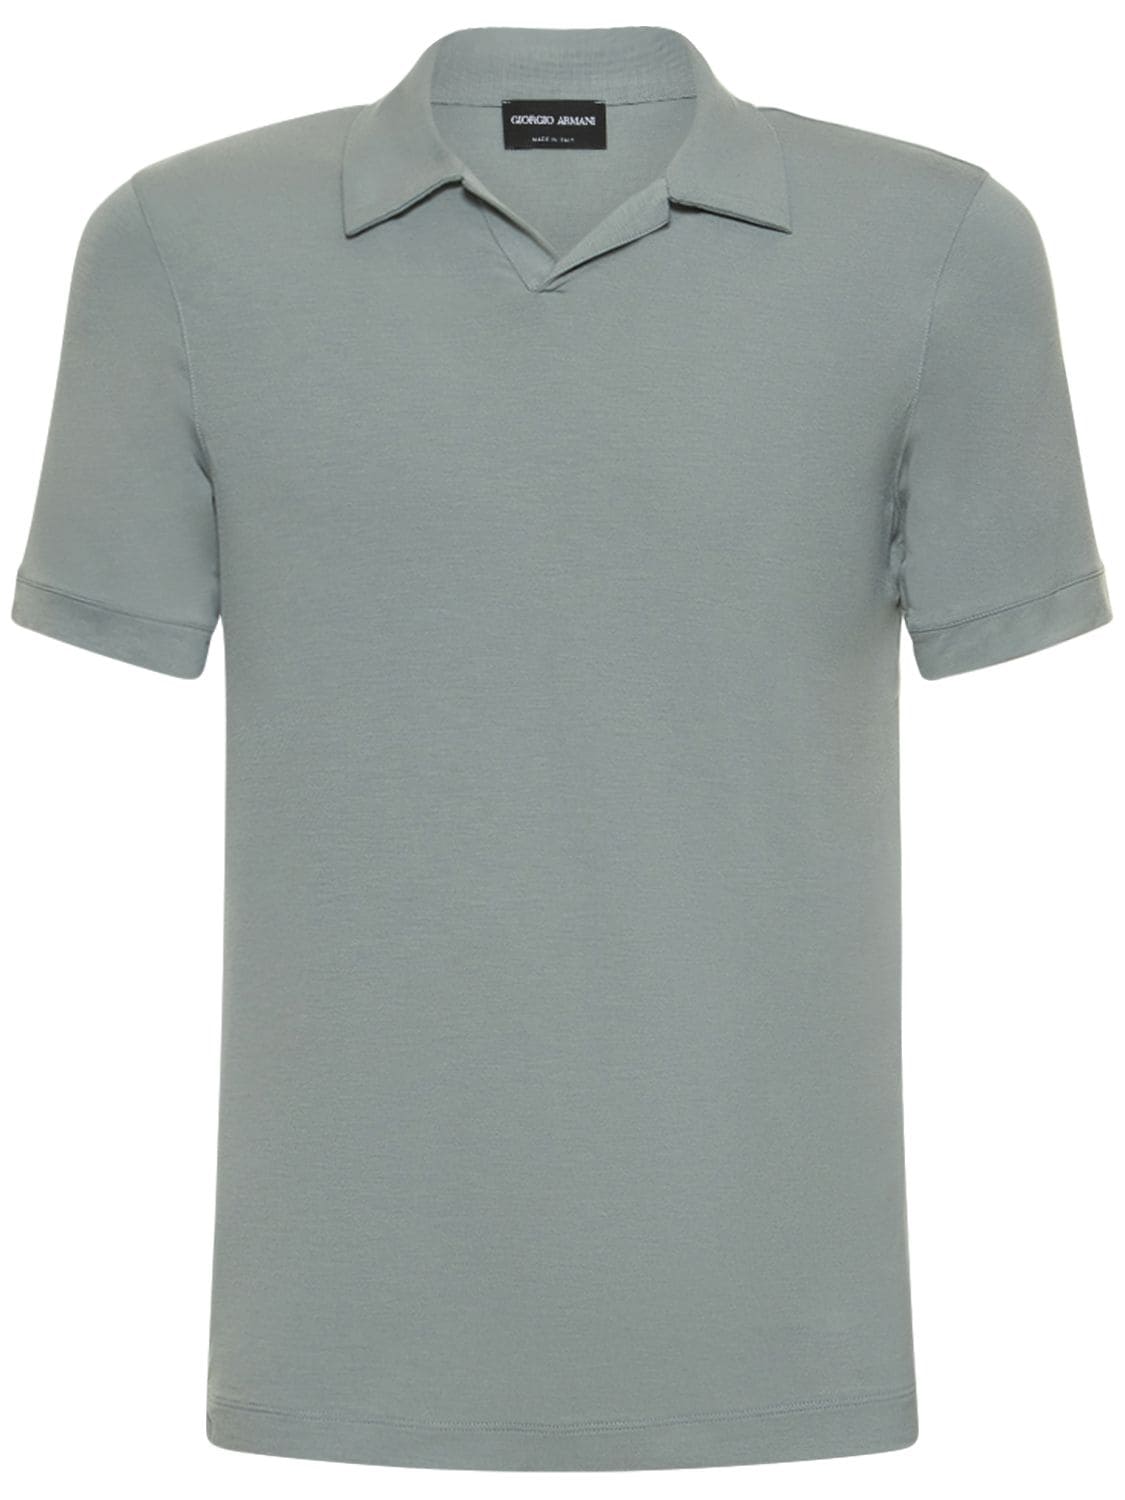 Giorgio Armani Short Sleeve Polo Shirt In Ash